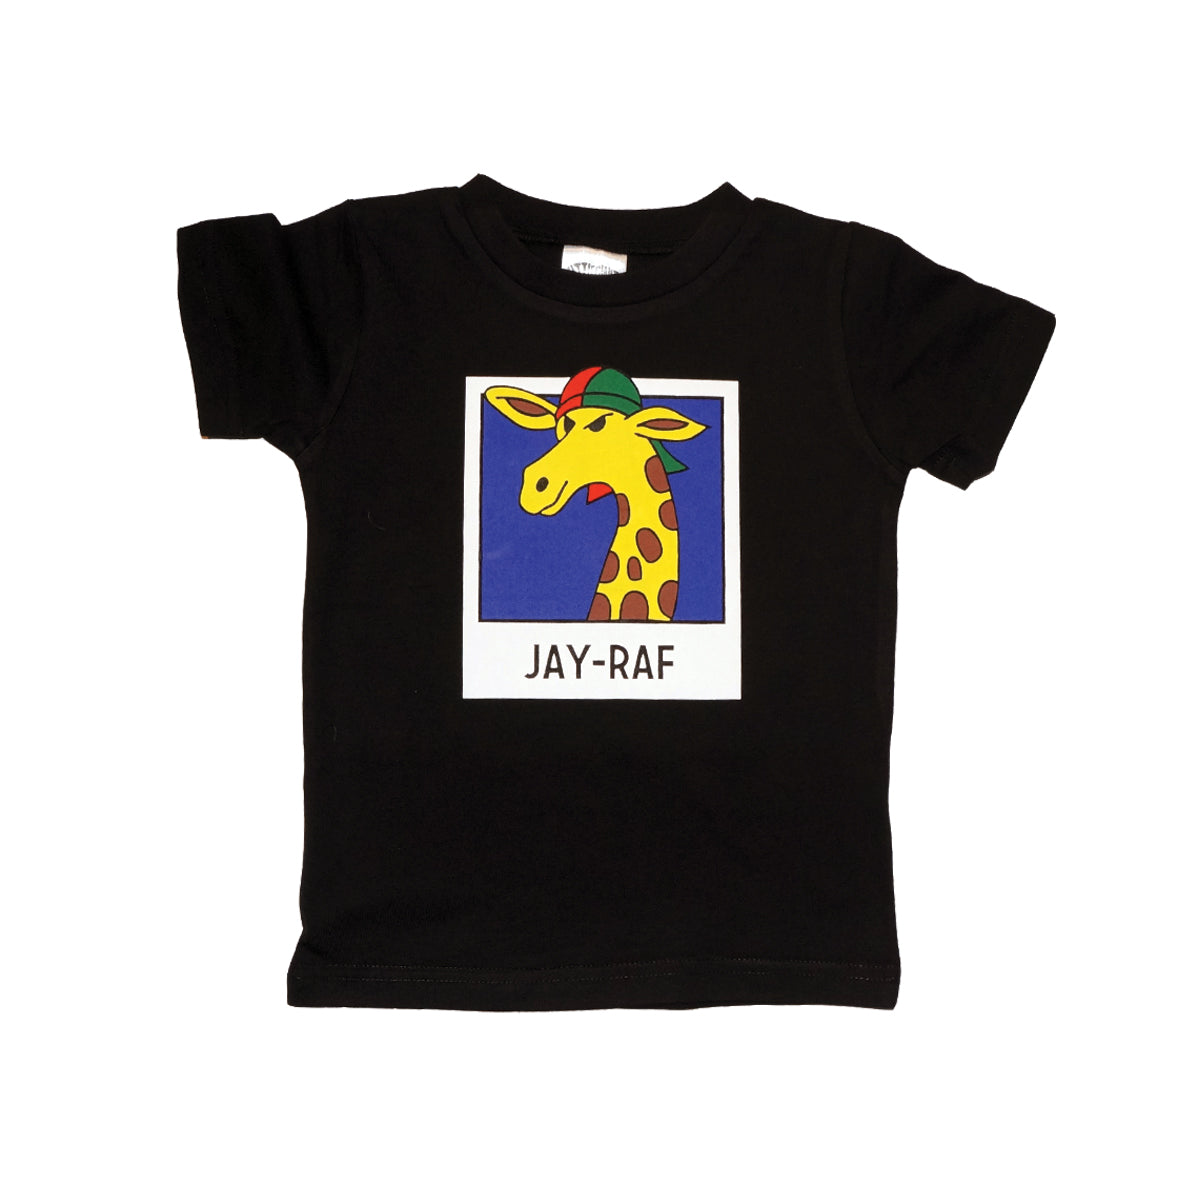 Jay-Raf T-shirt (Black)